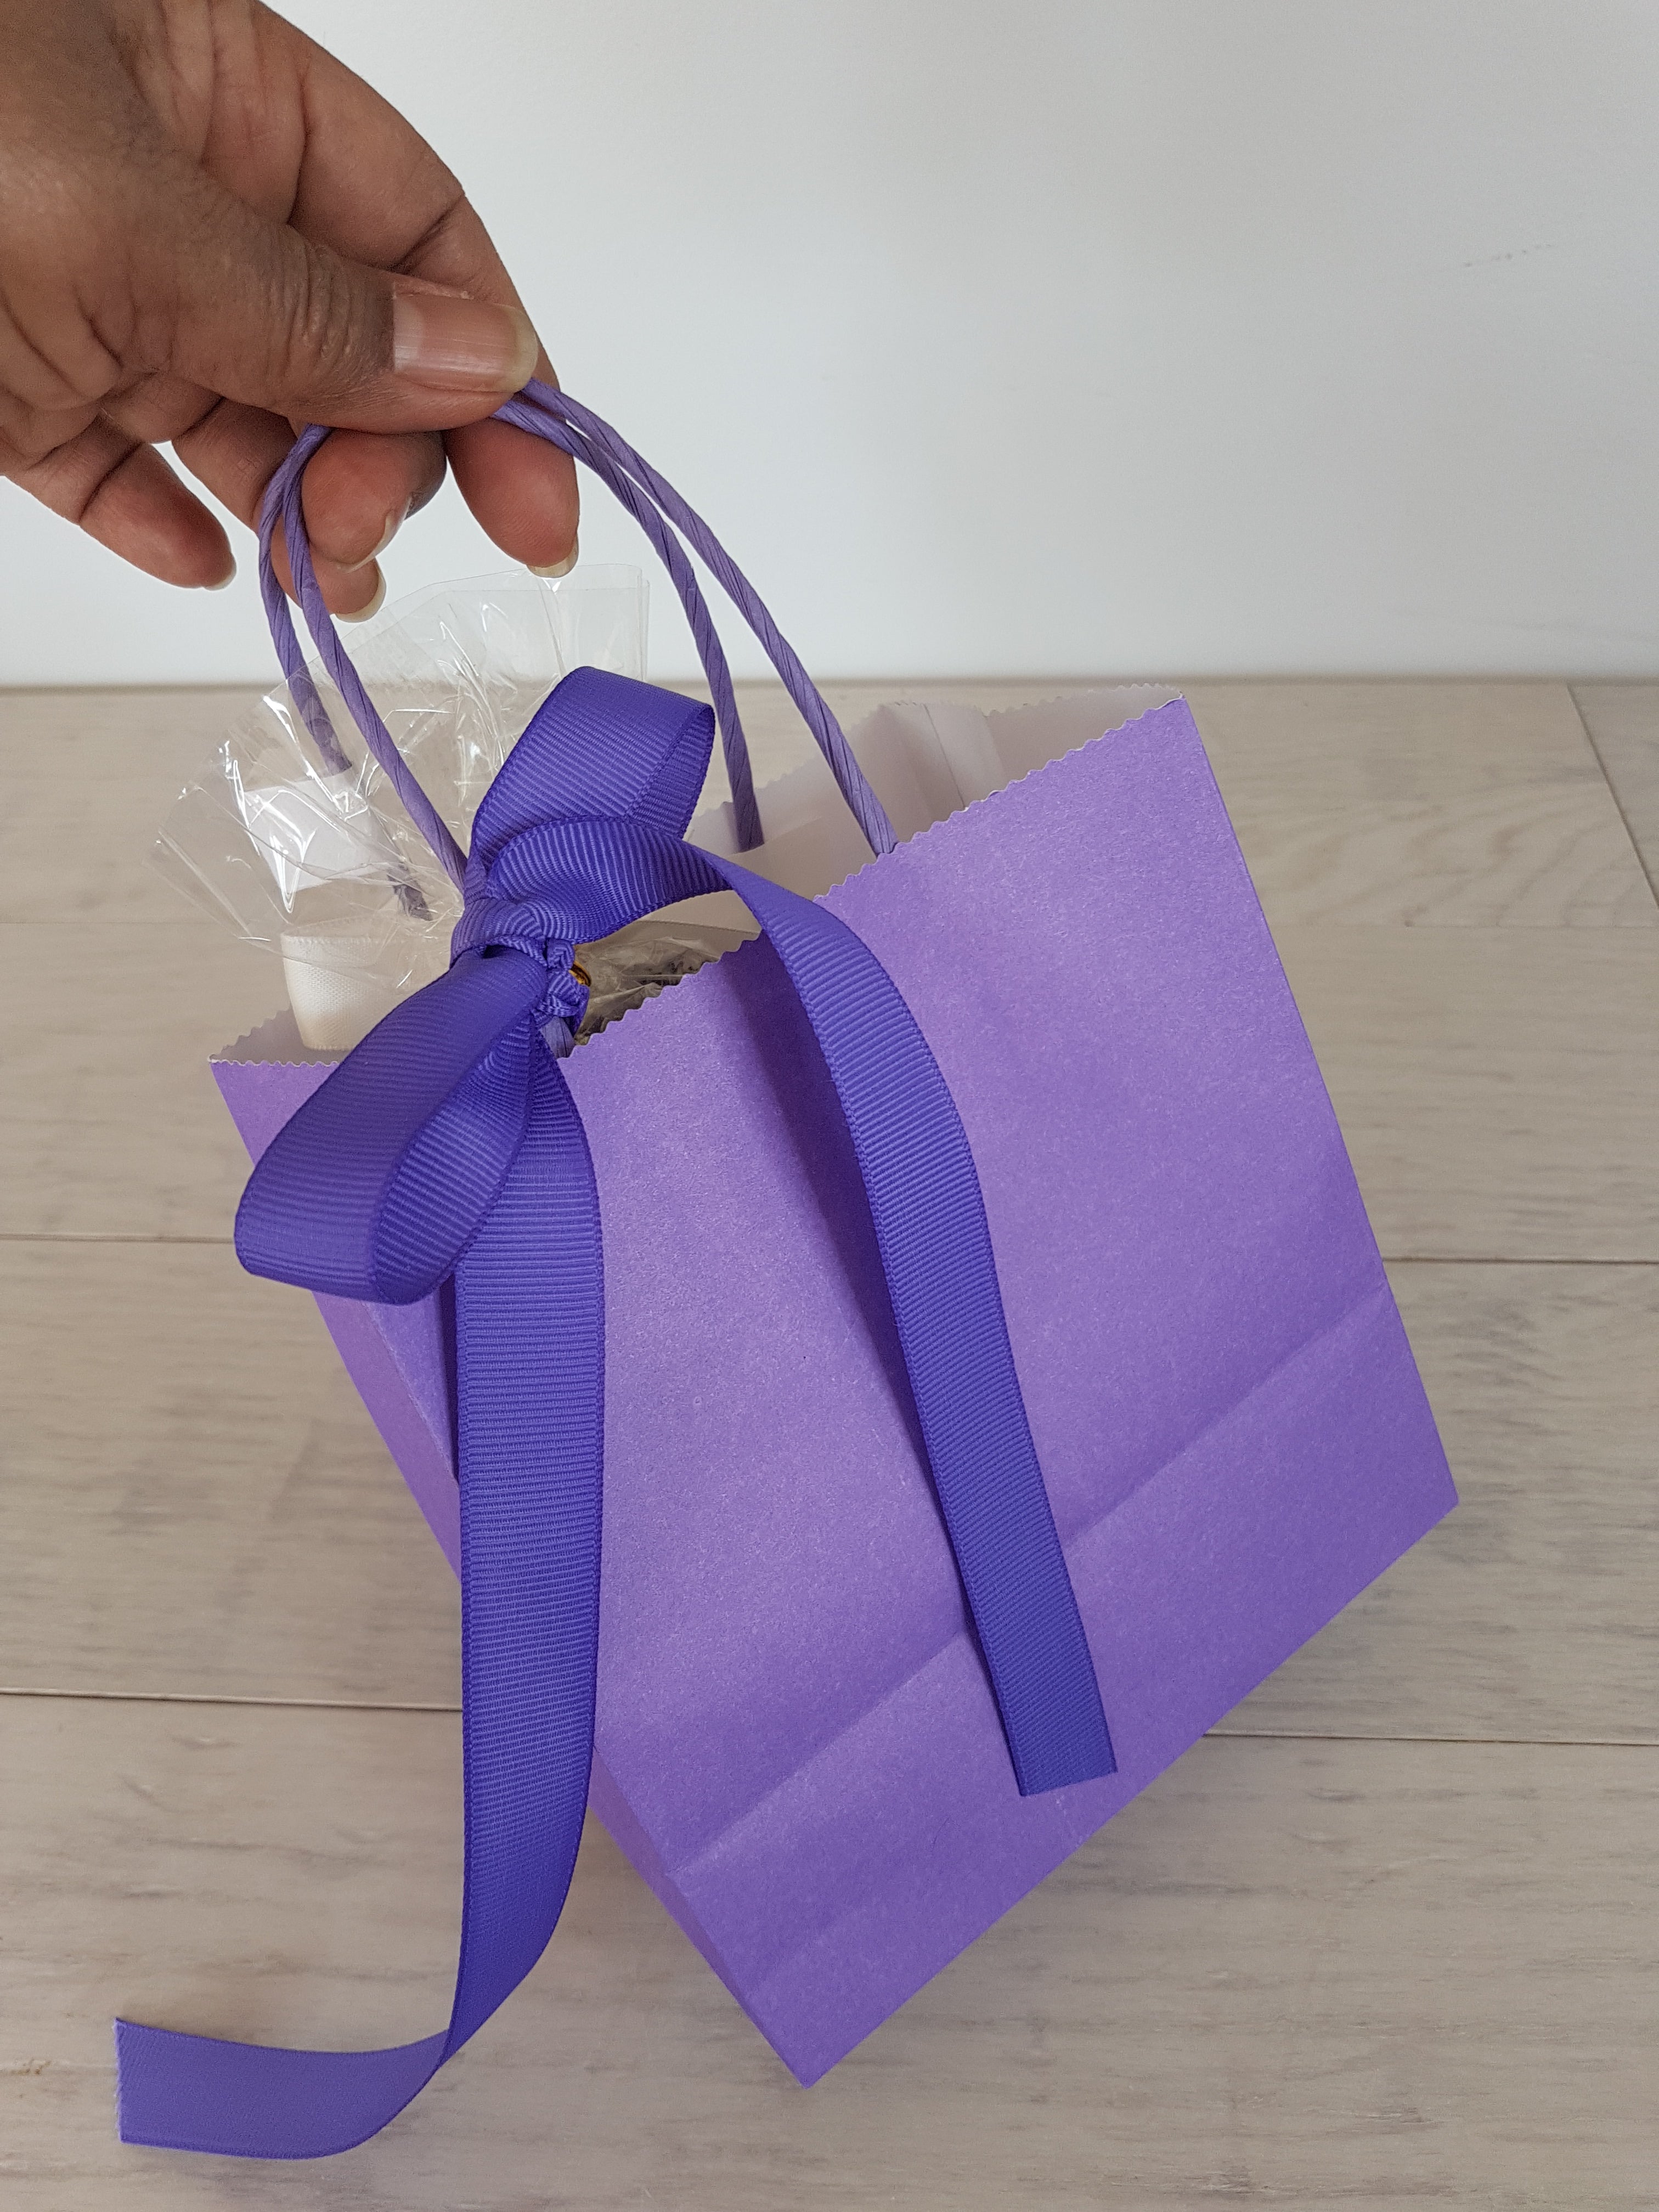 Lavender Gift bag at the Camellia